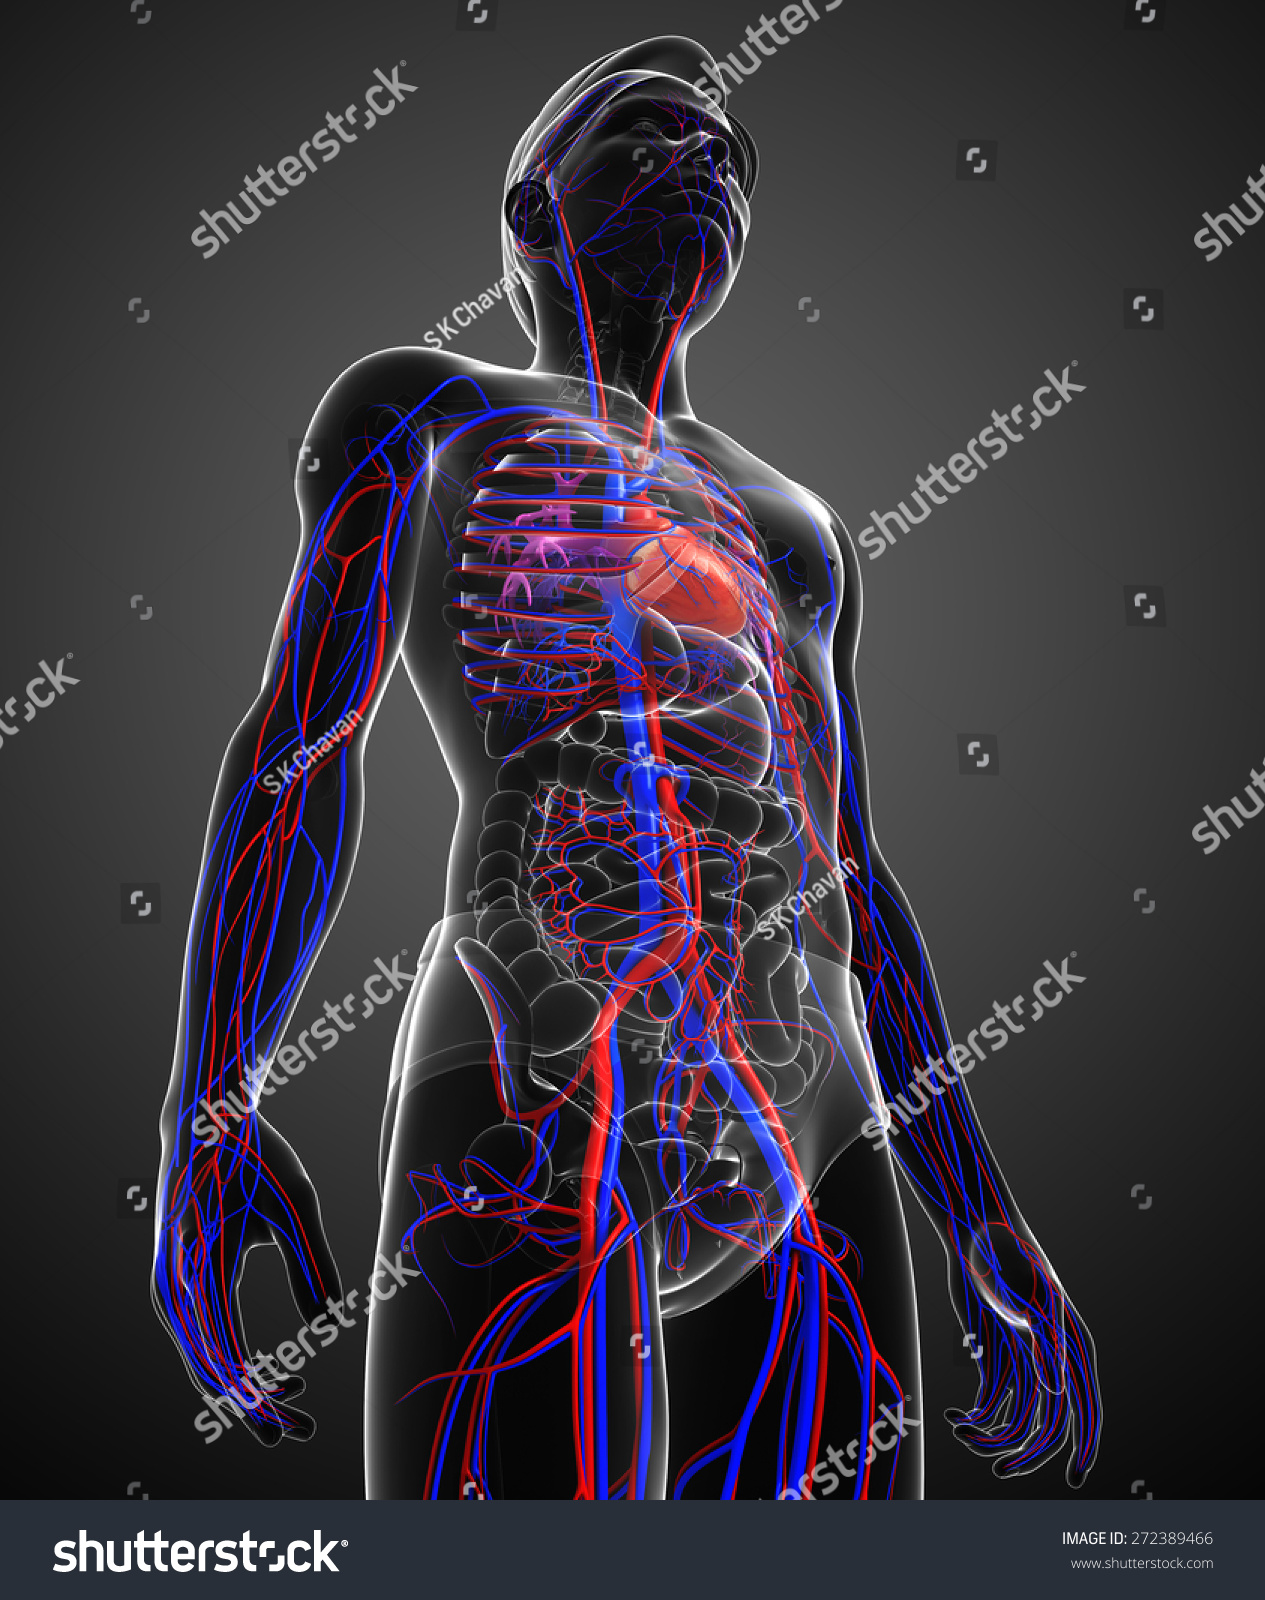 Illustration Of Male Circulatory System - 272389466 : Shutterstock